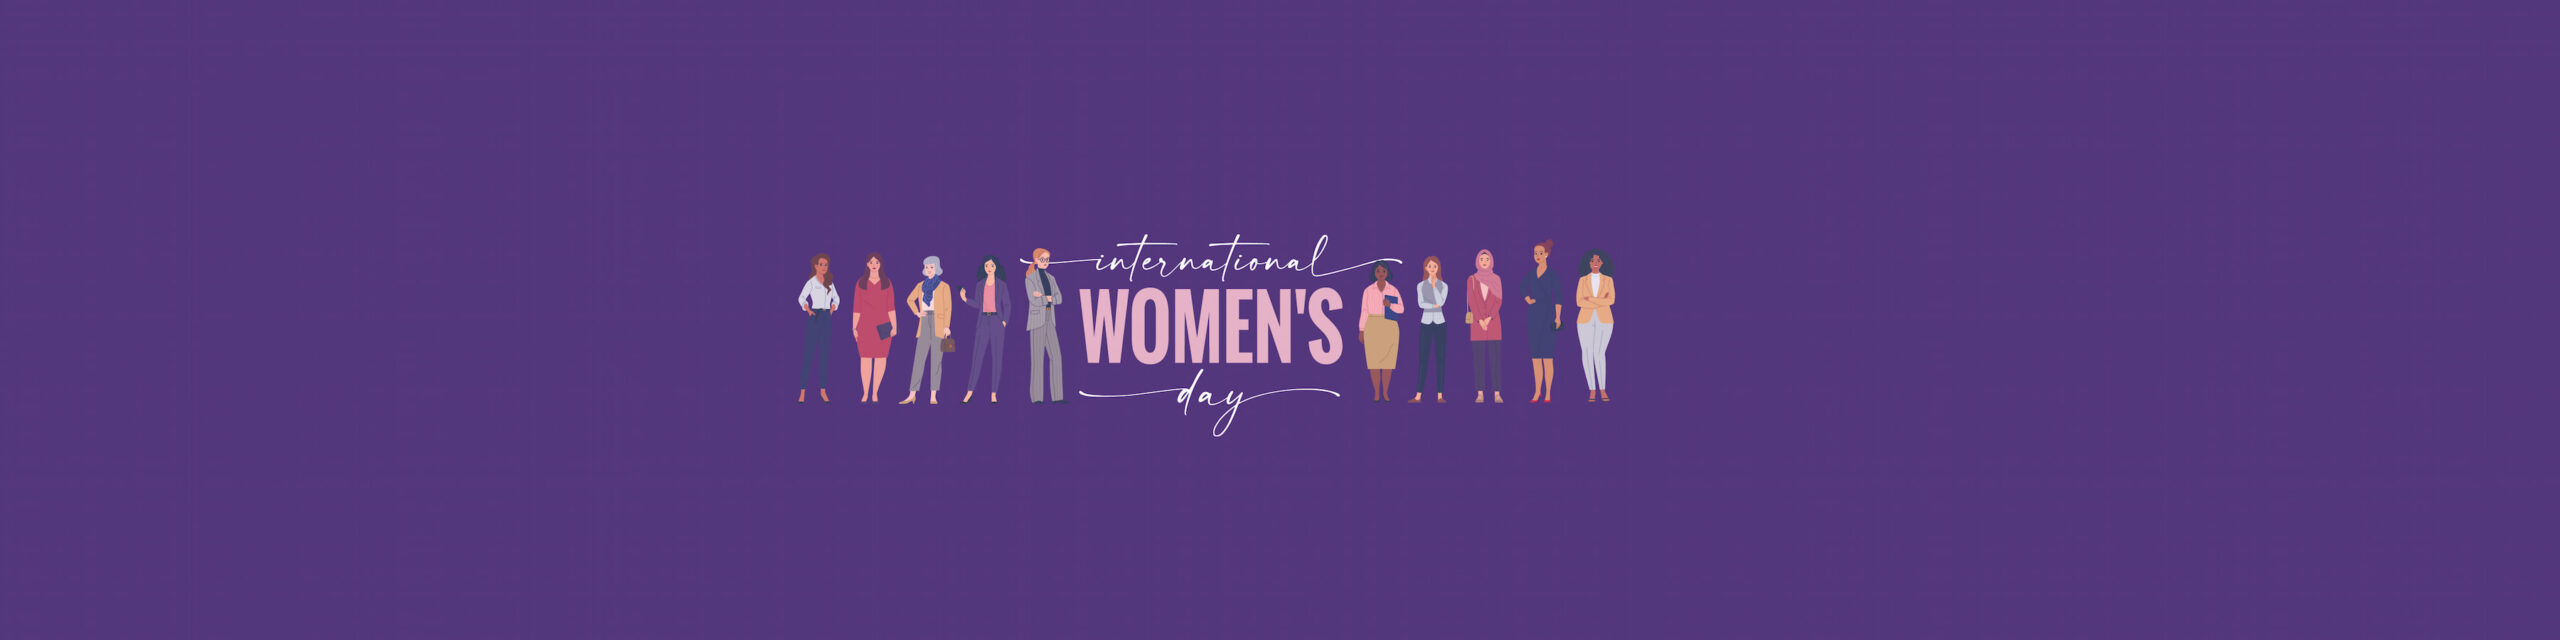 International Women's Day banner purple